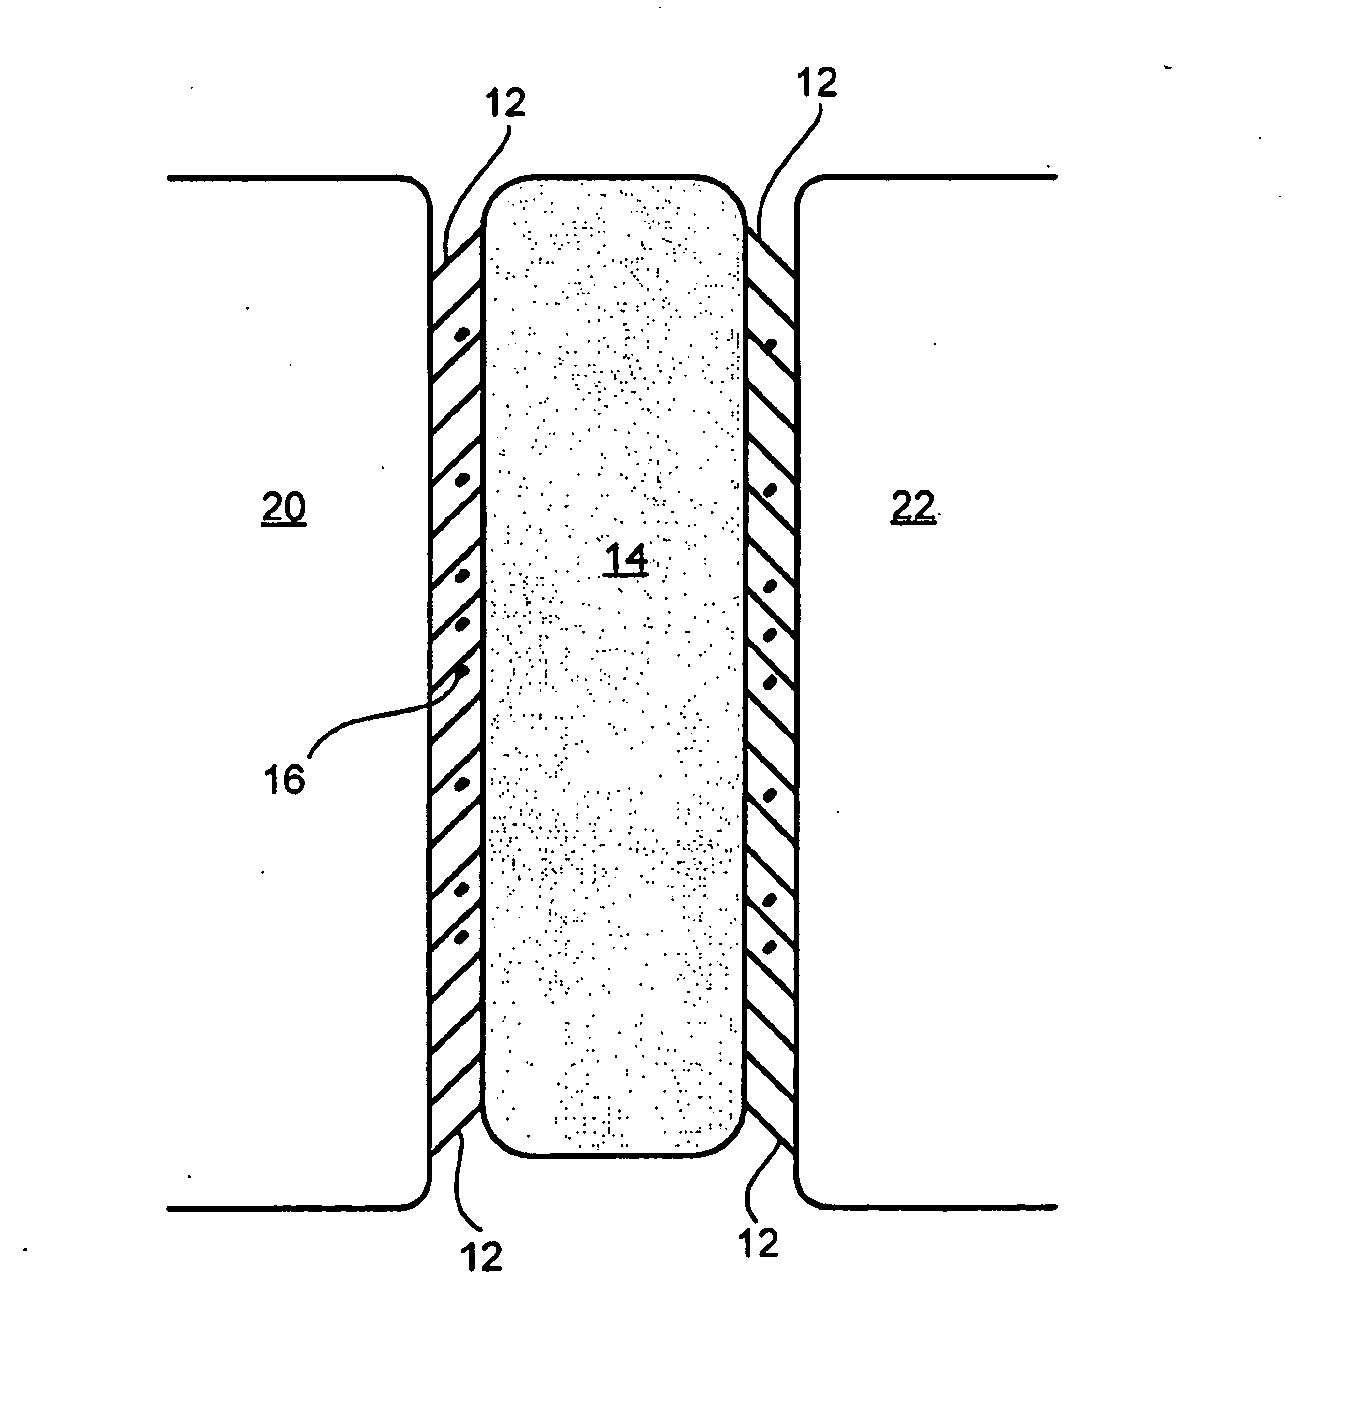 Method and apparatus for adhesive bonding in an aqueous medium